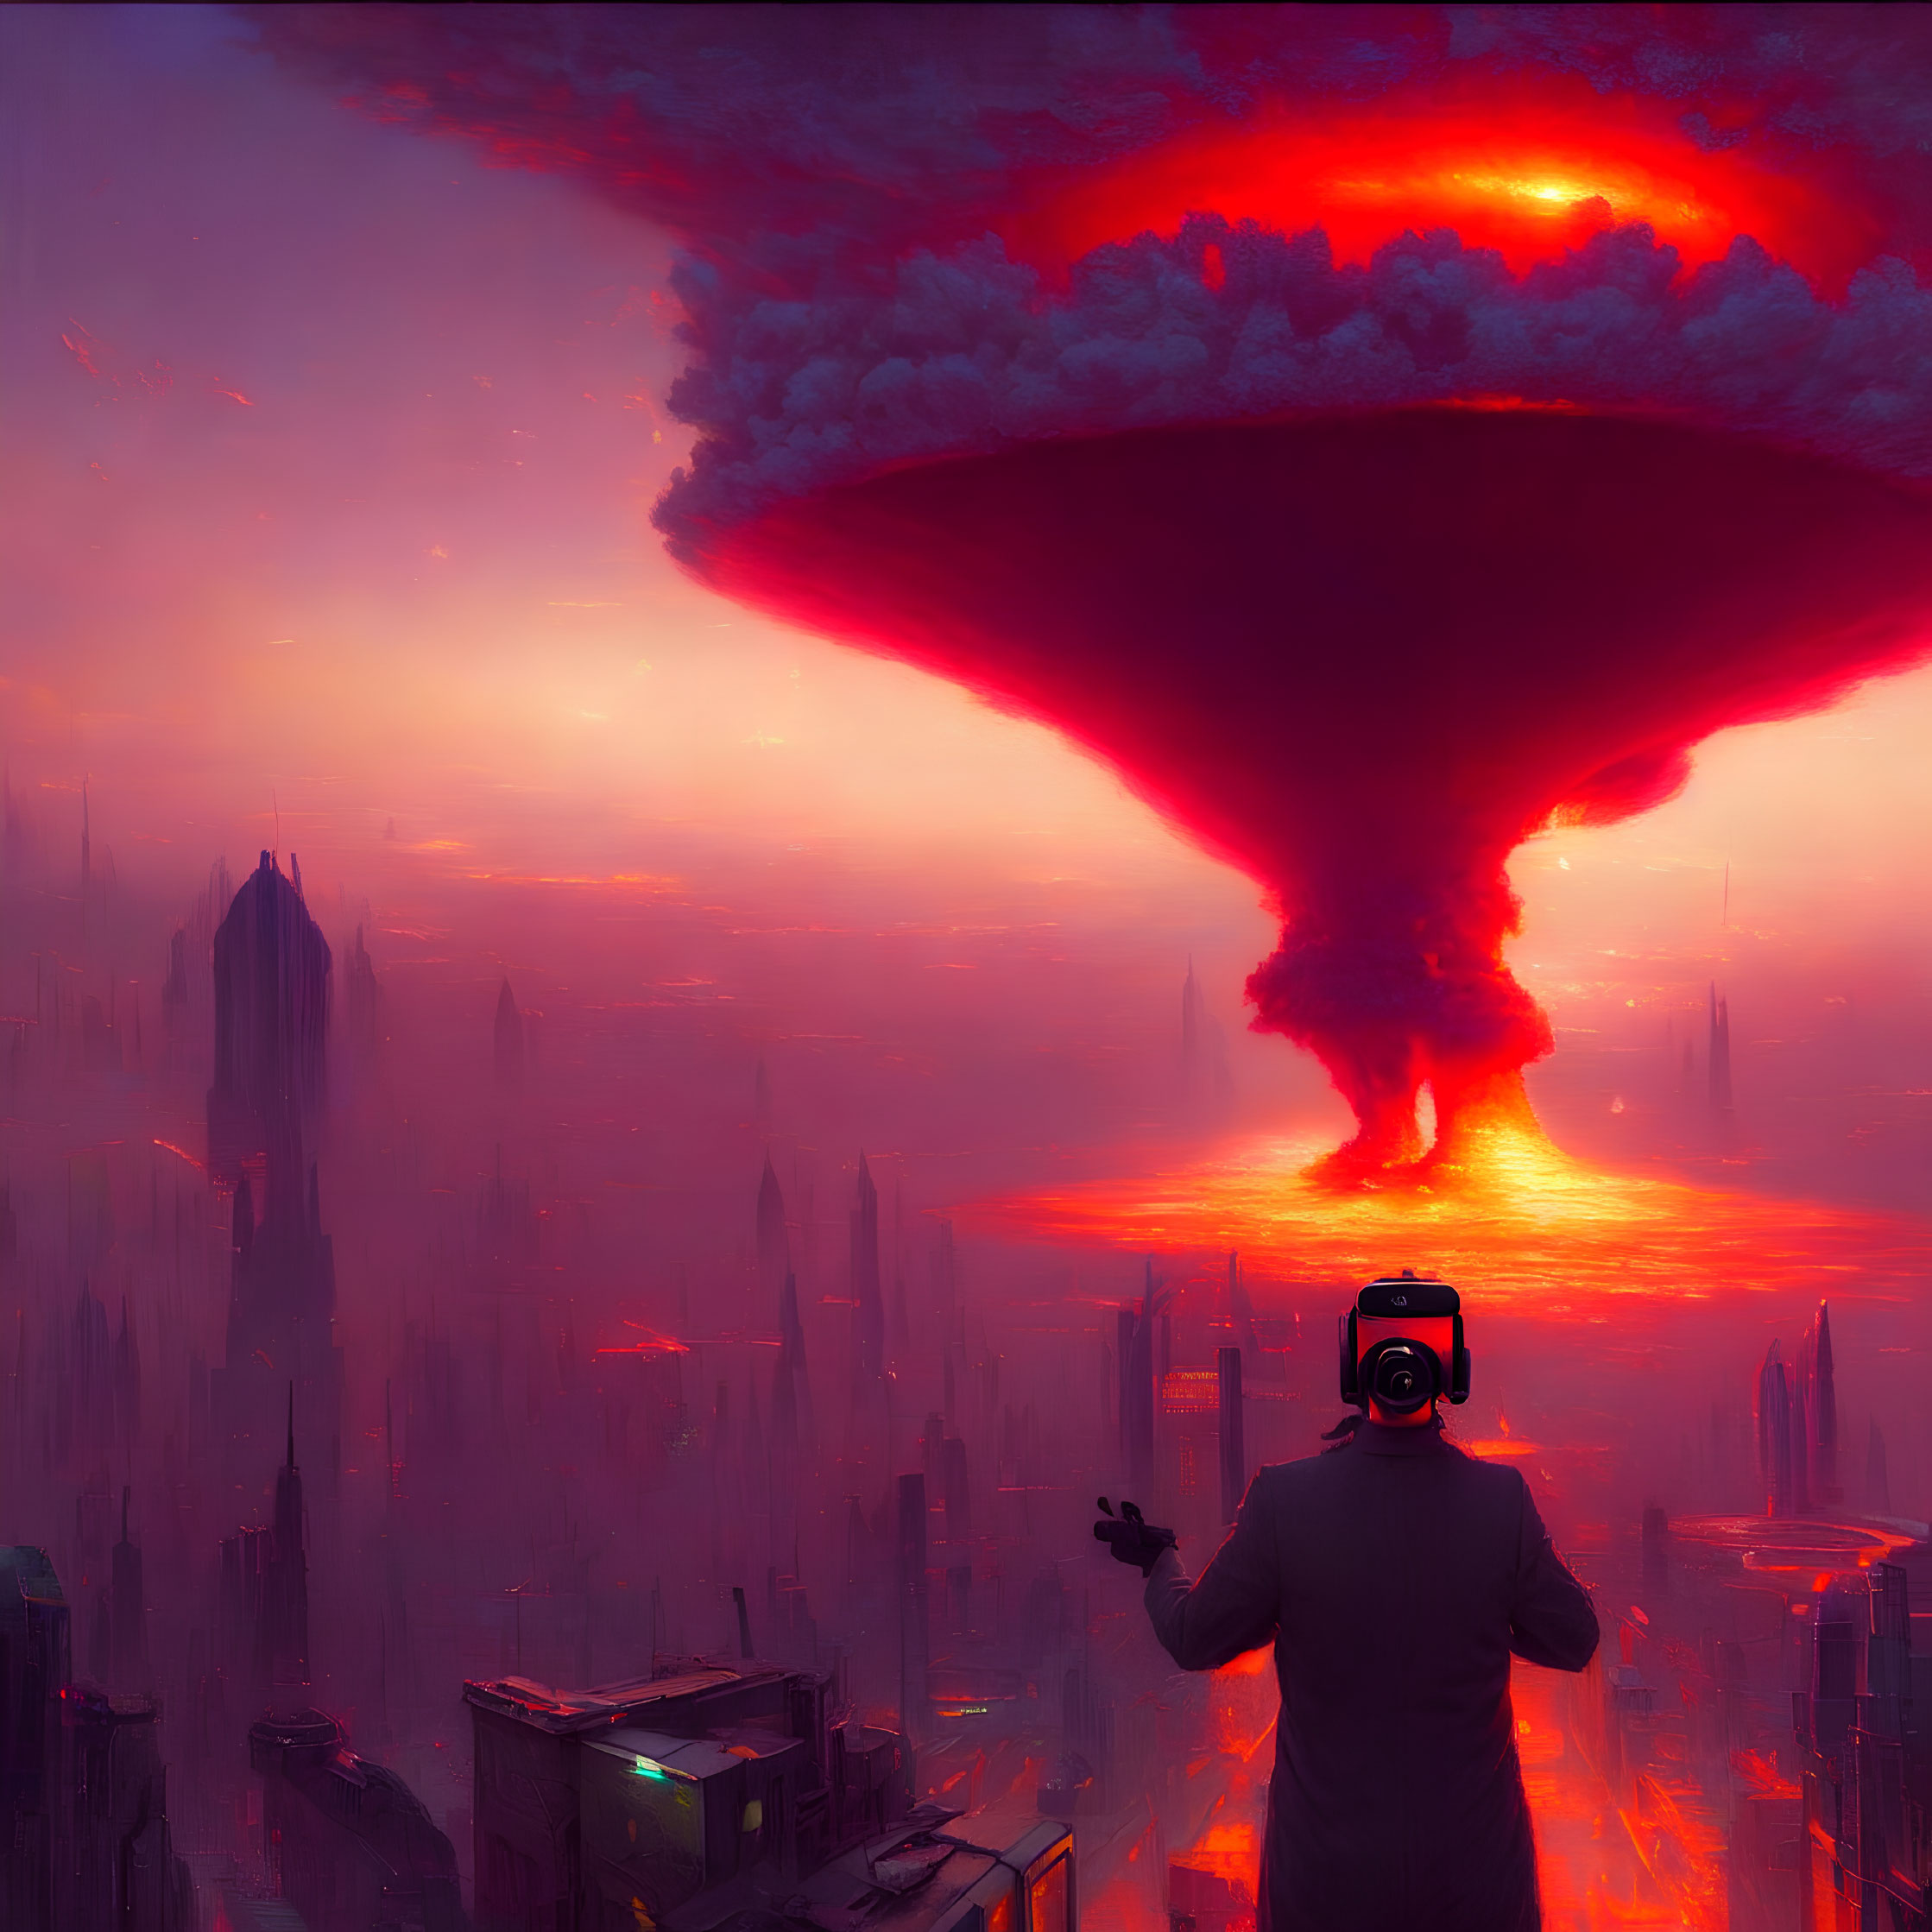 Futuristic cityscape with massive fiery mushroom cloud